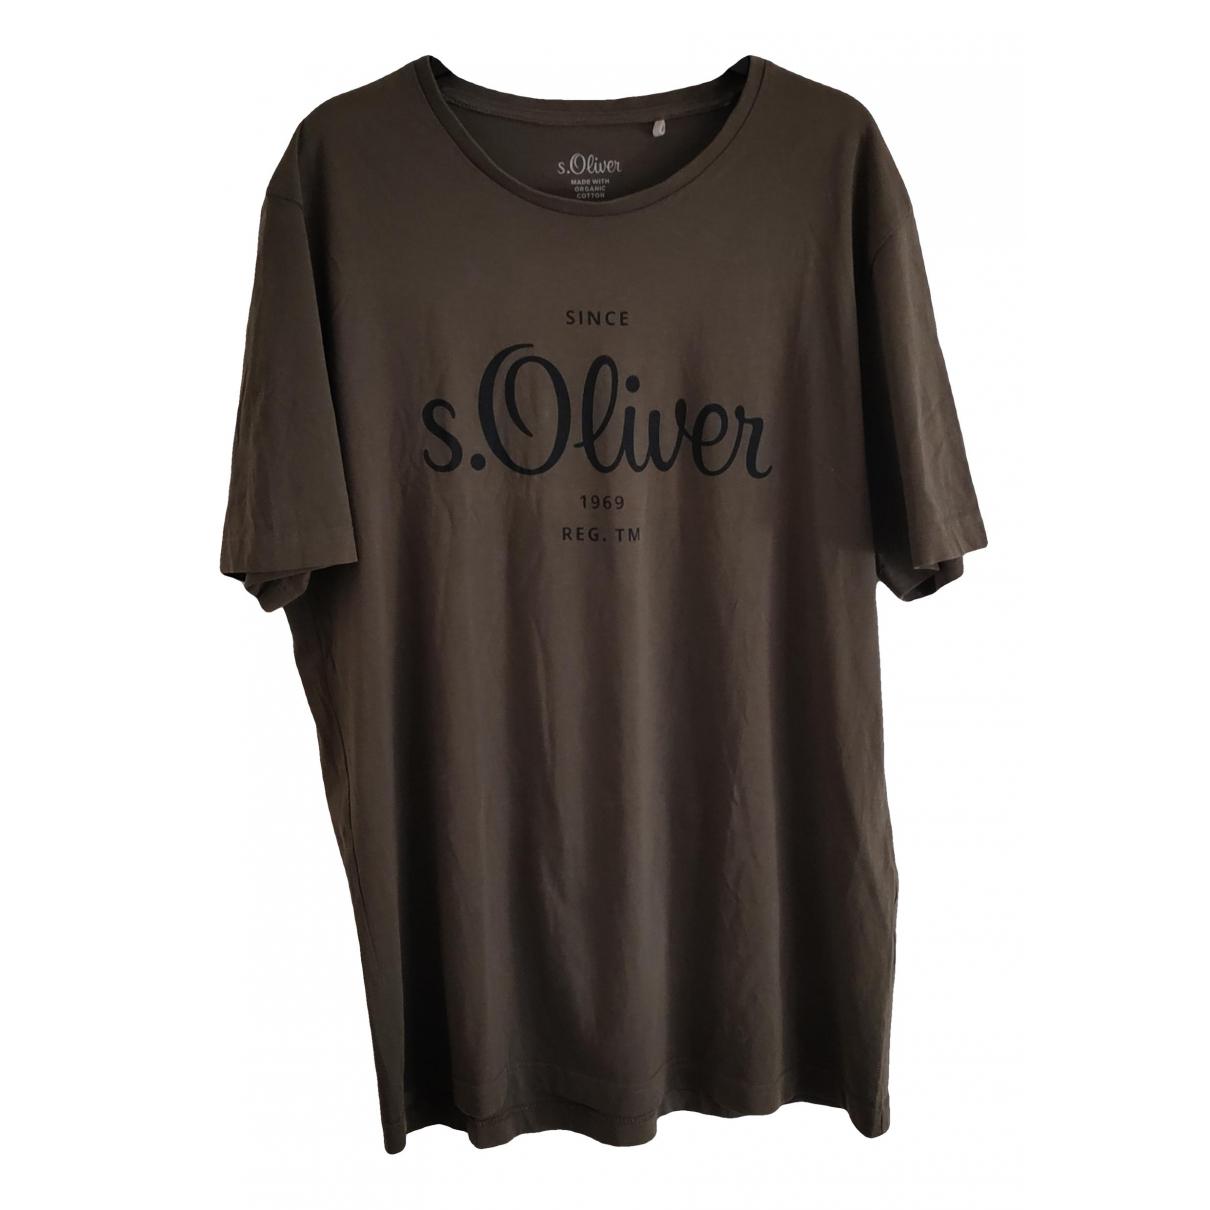 Cotton S Oliver T-shirts for Men - Vestiaire Collective